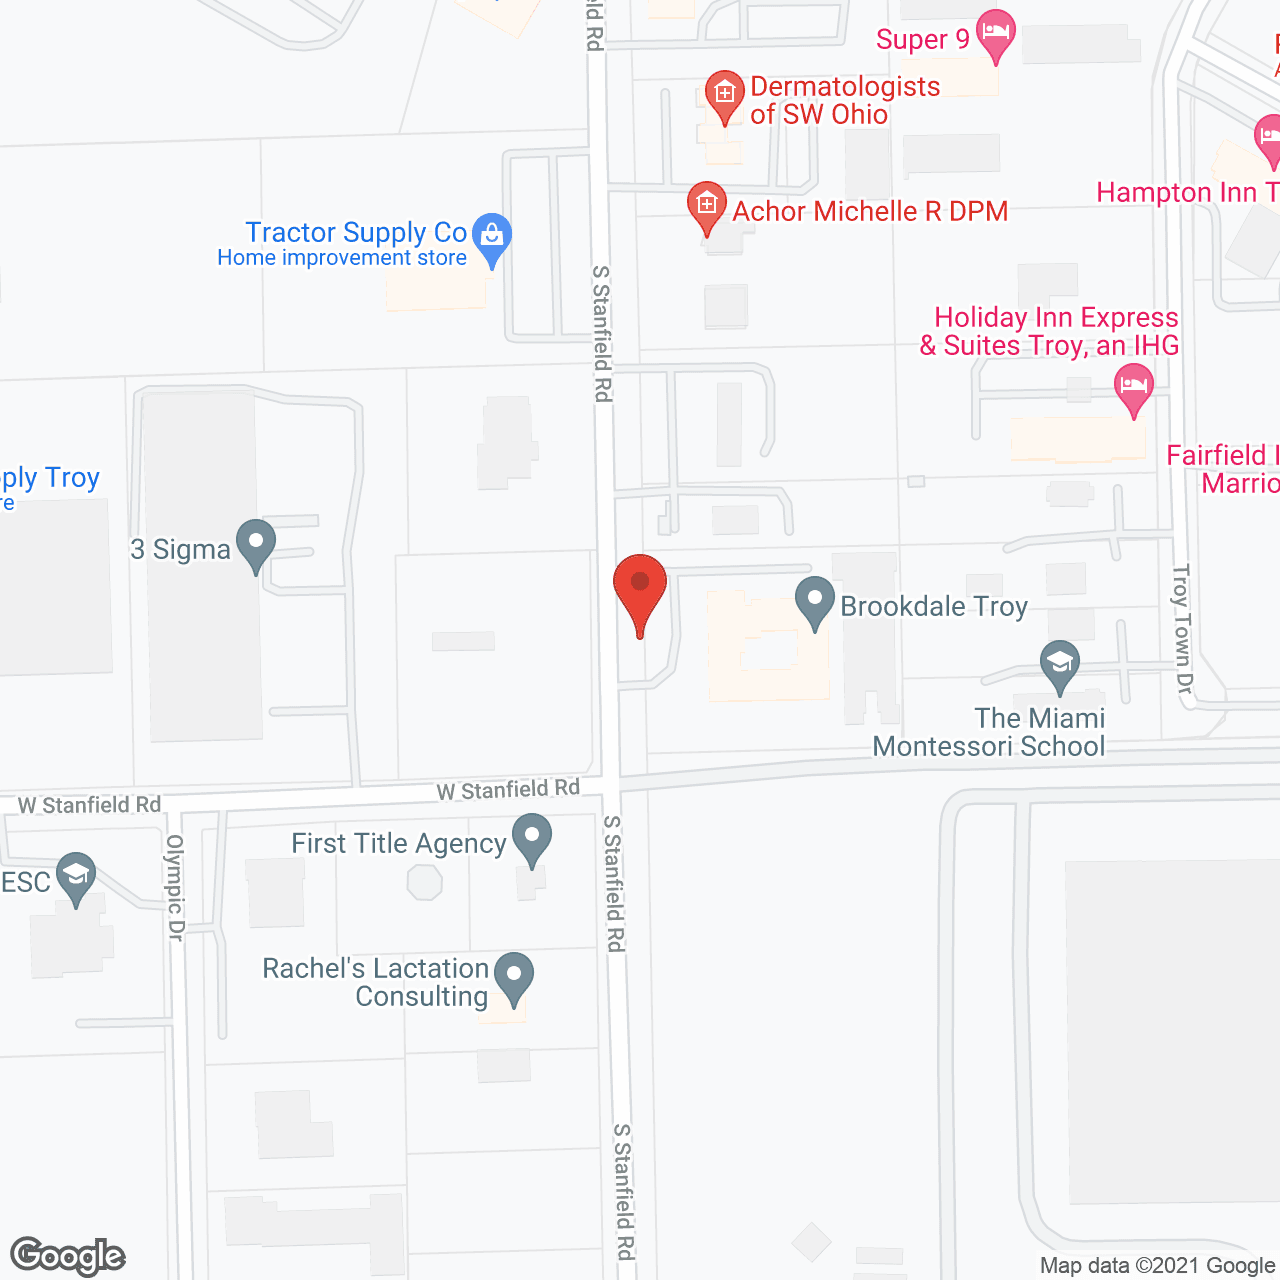 Brookdale Troy in google map